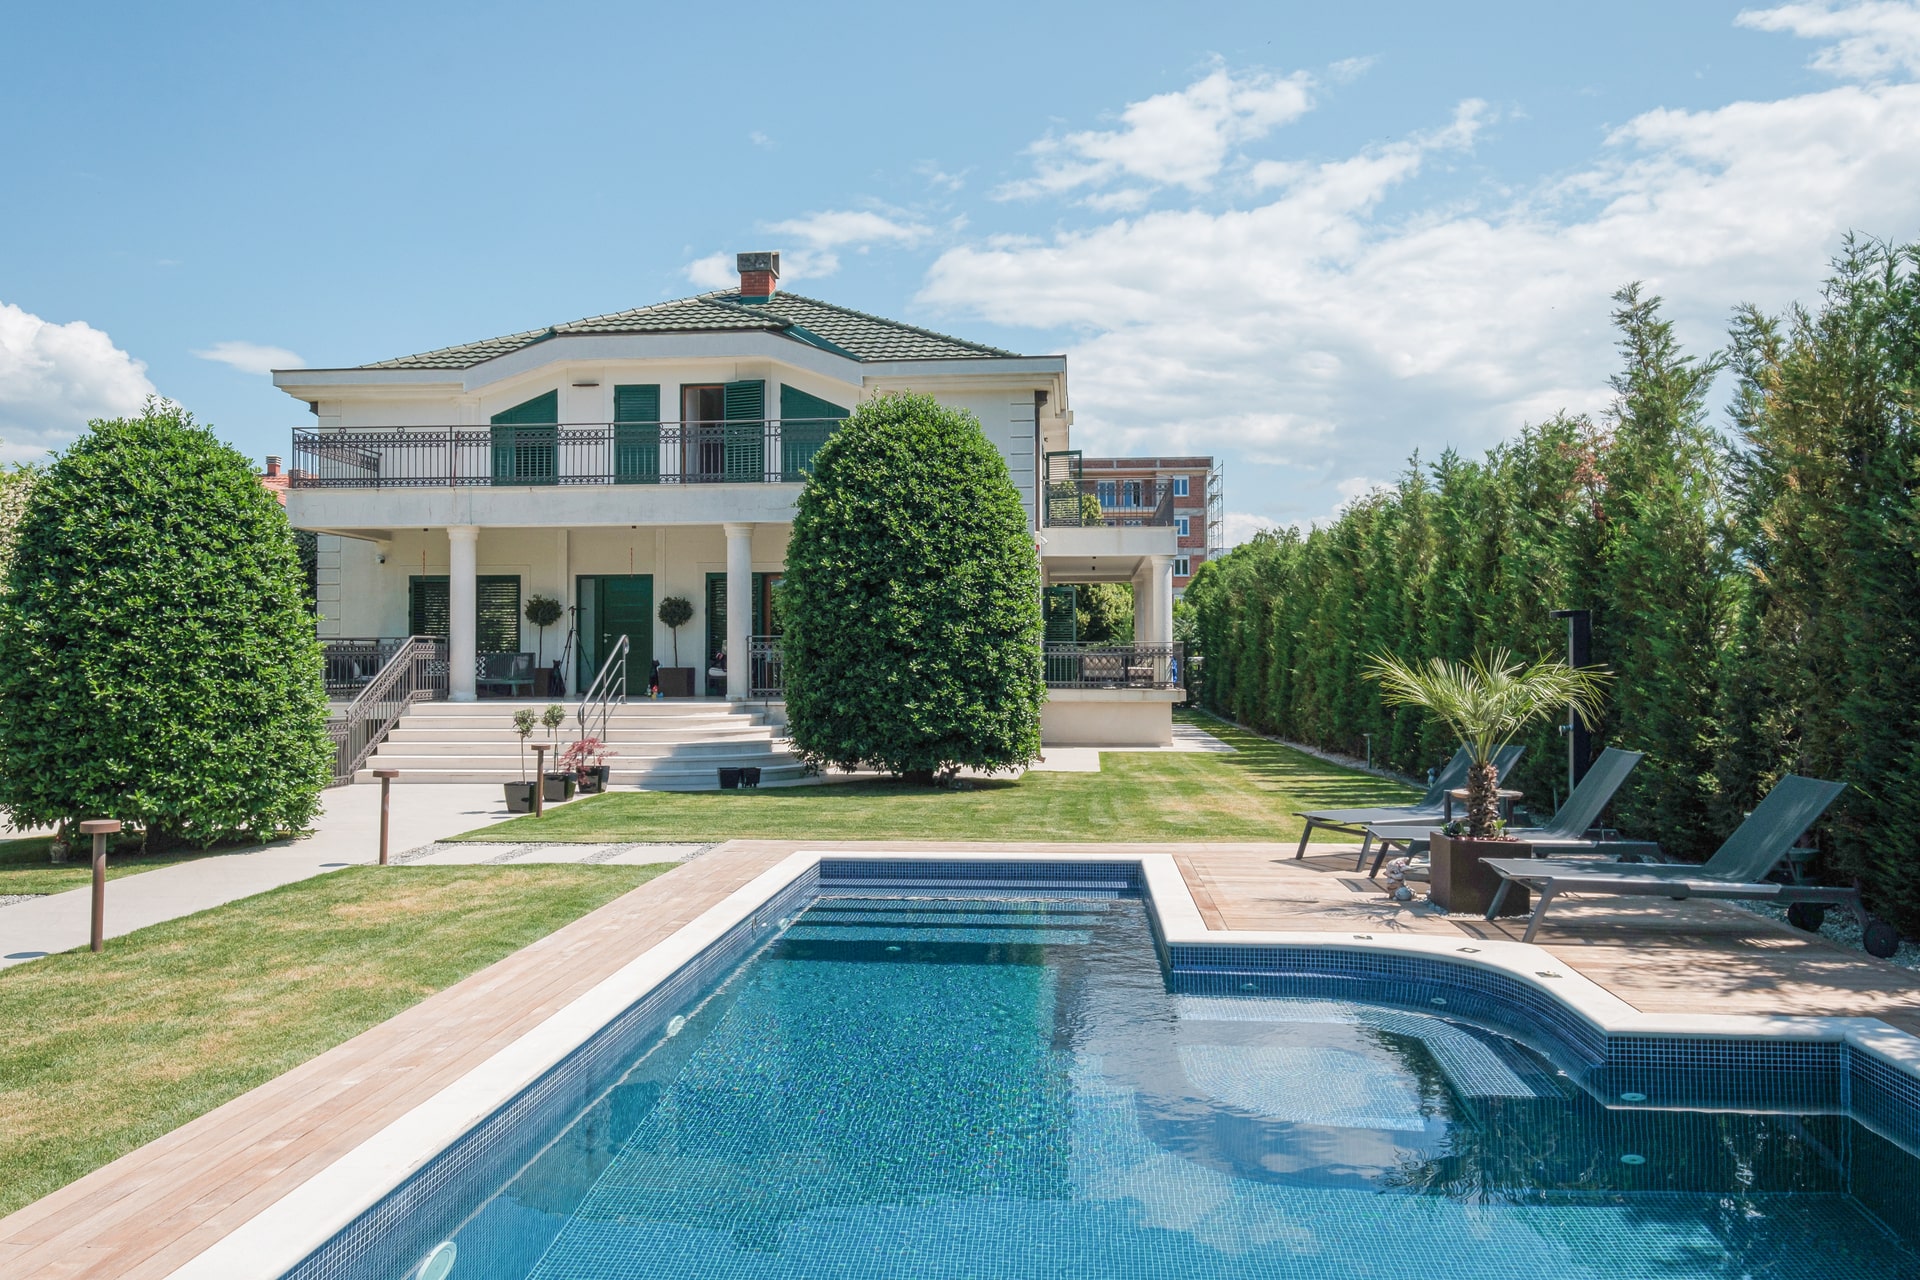 Podgorica, Zabjelo – designer three-bedroom villa with an outdoor swimming pool